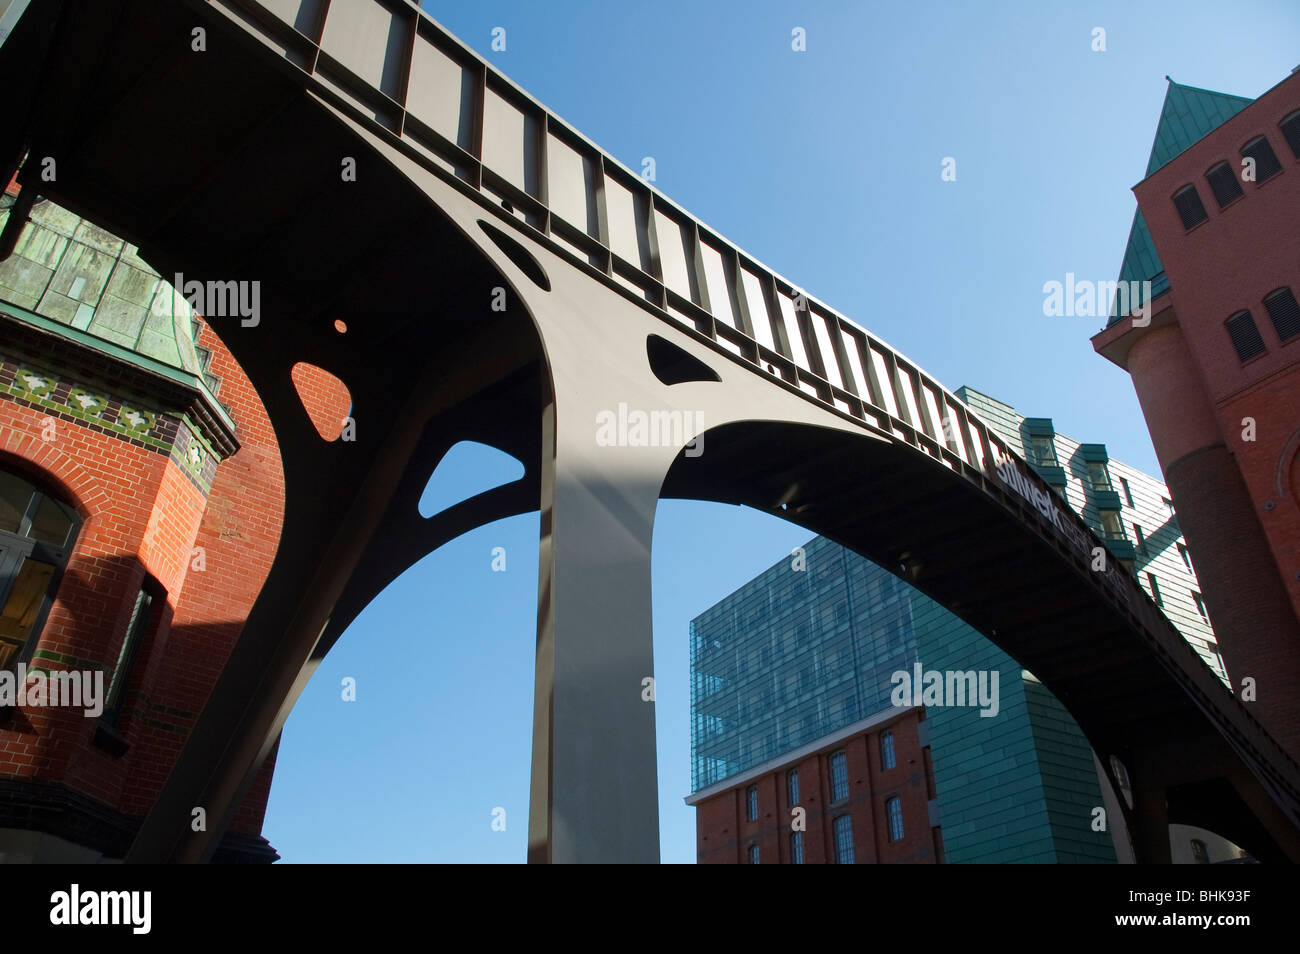 Stilwerk and bridge, Altona, port, Hamburg, Germany Stock Photo